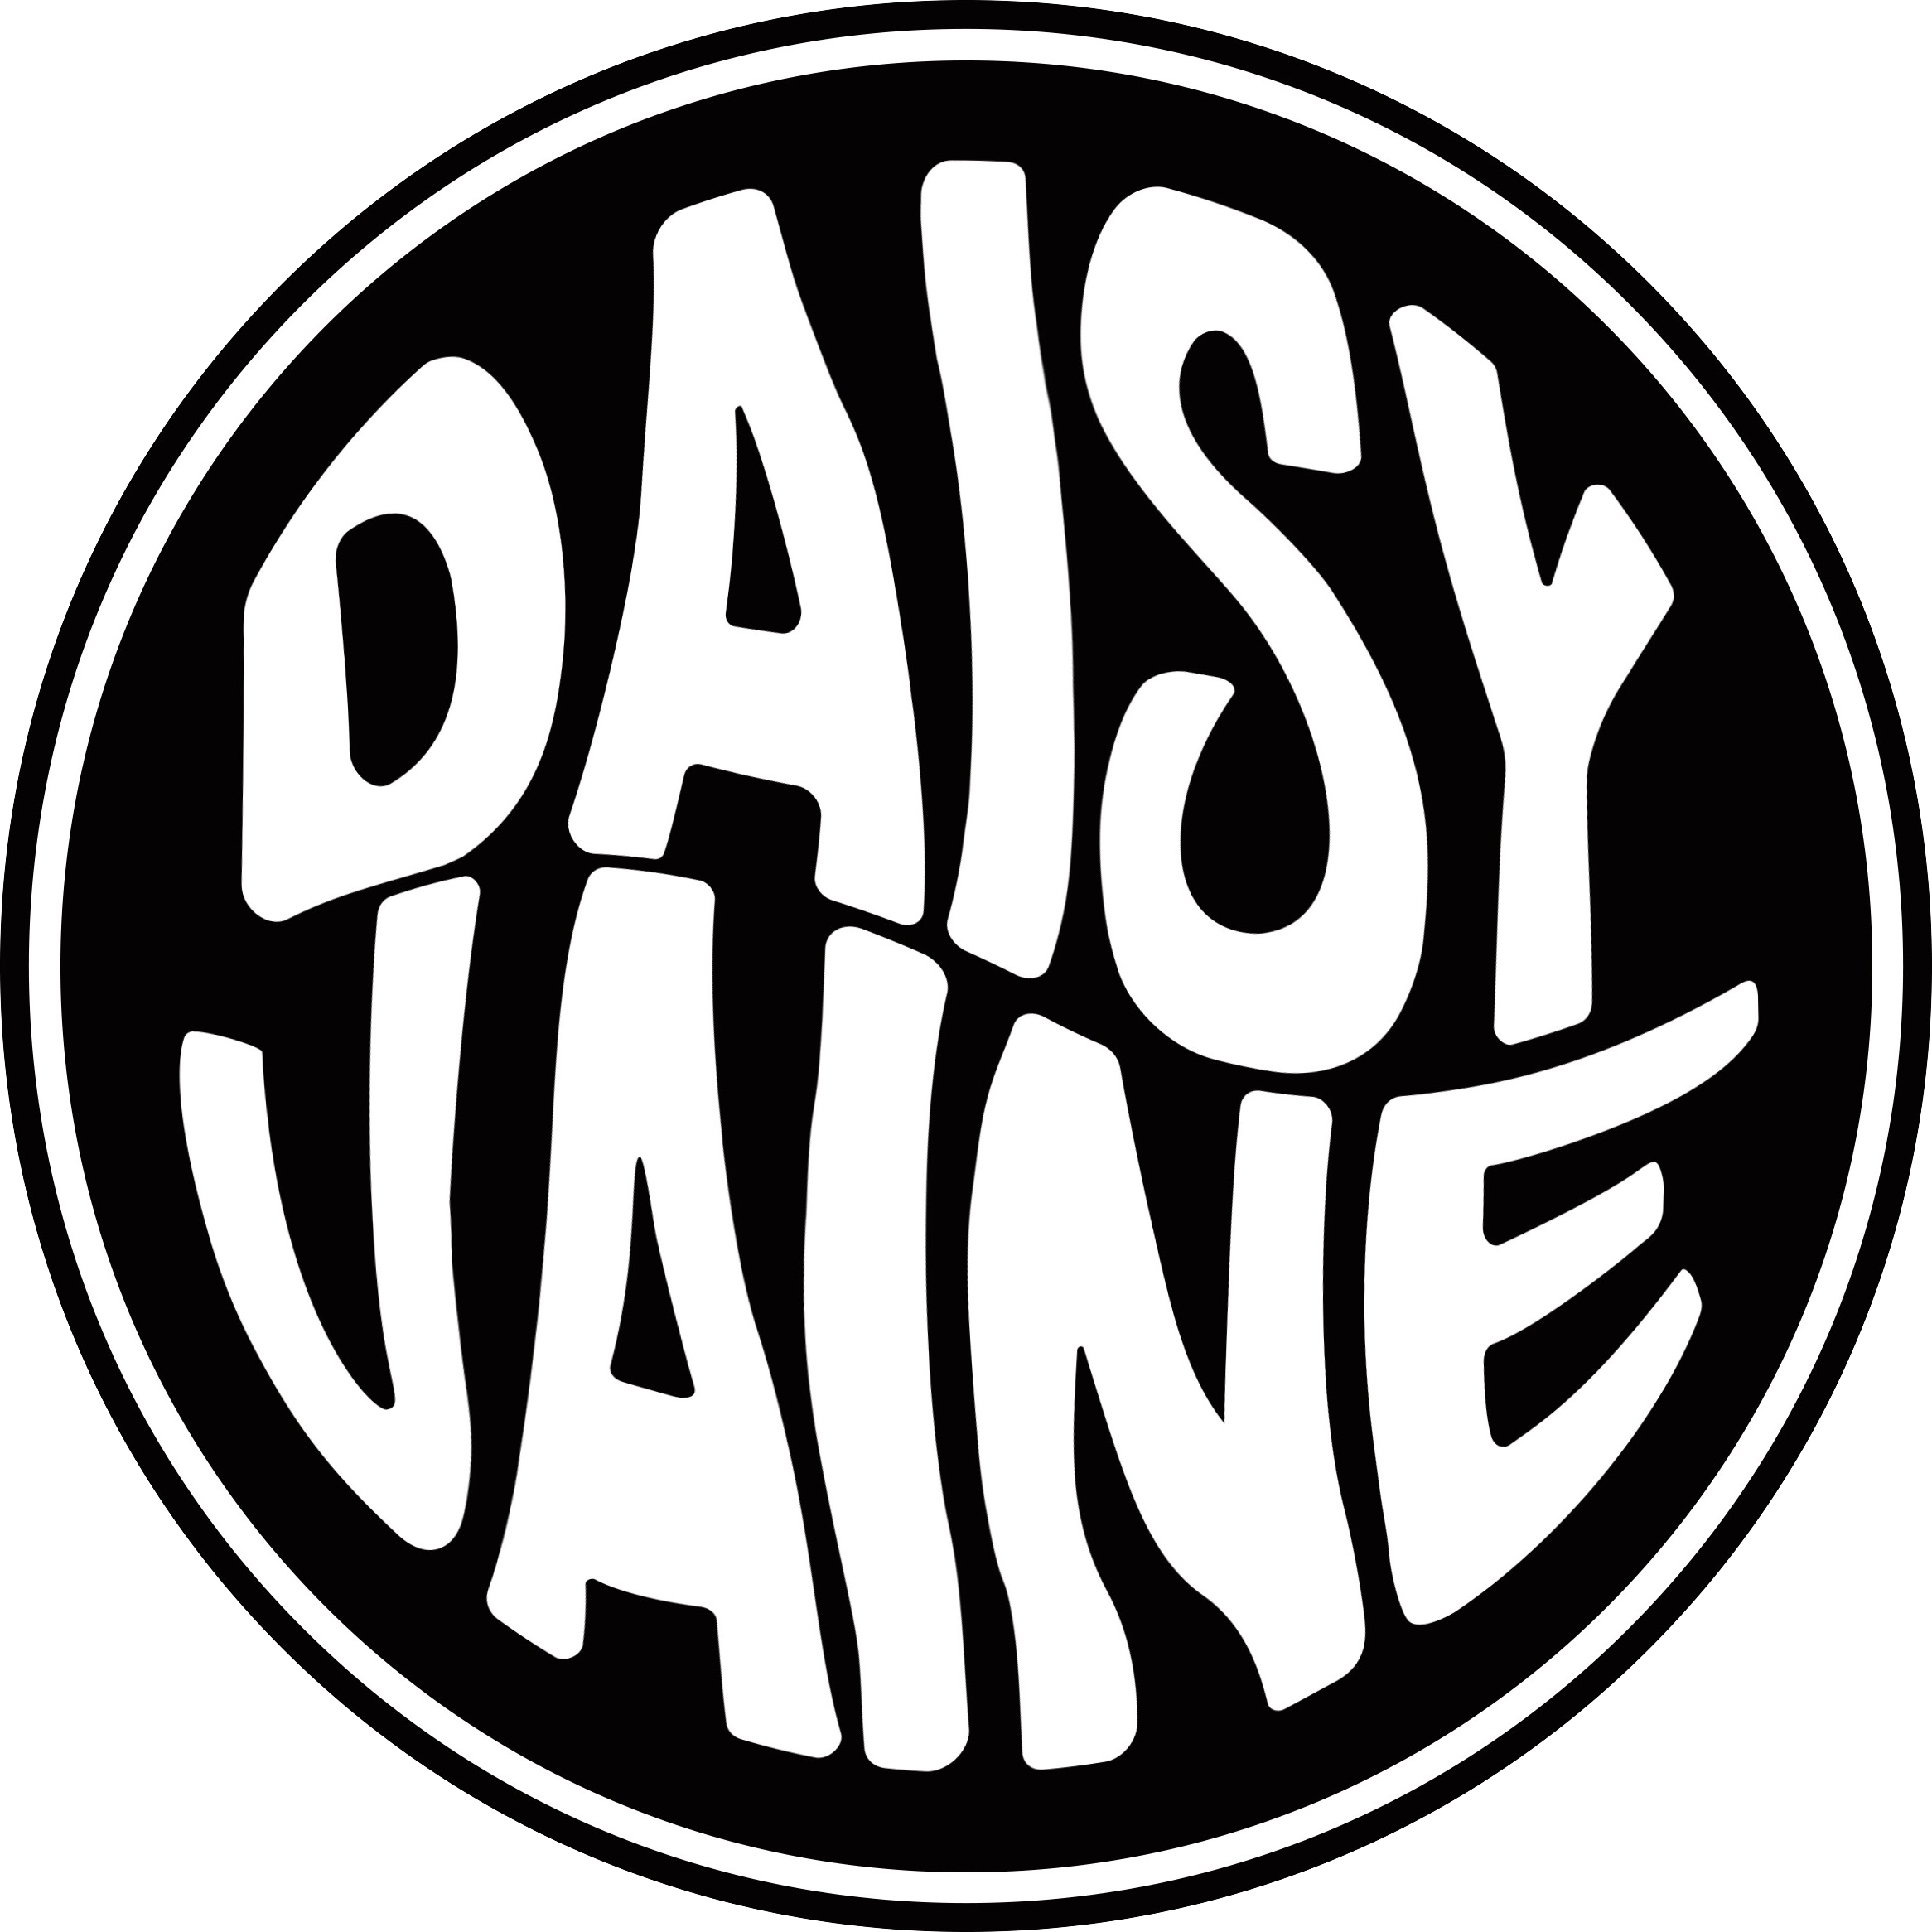 Daisy Jaine - Official Store